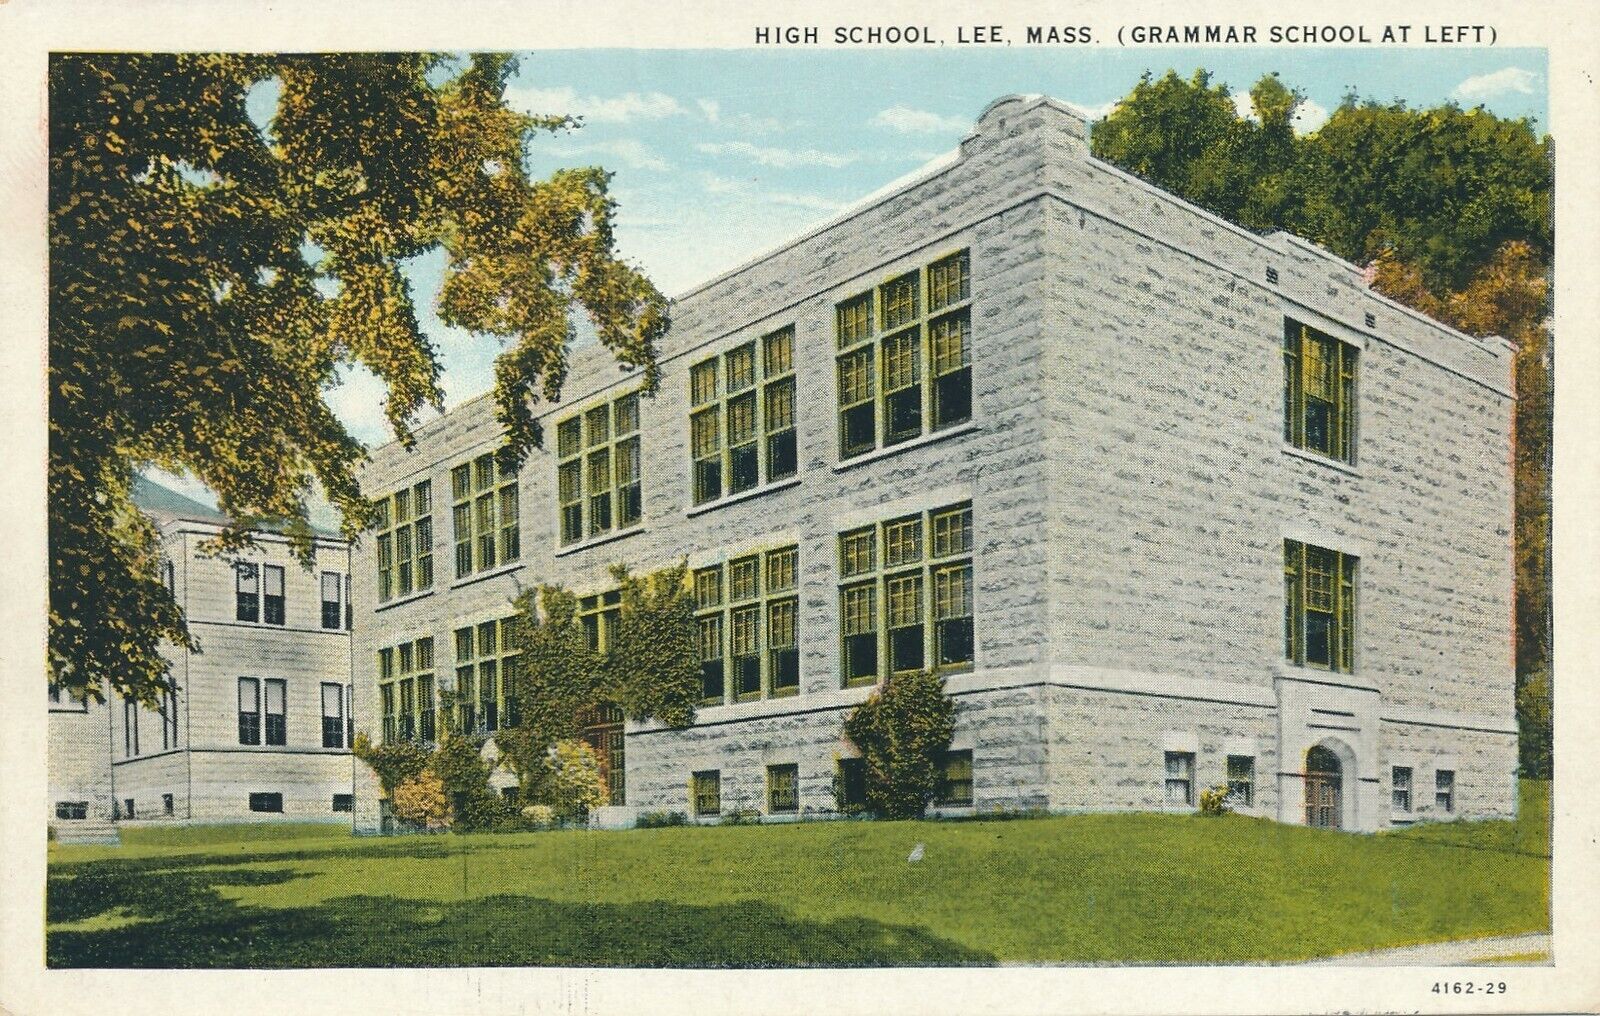 LEE MA – High School showing Grammar School at Left